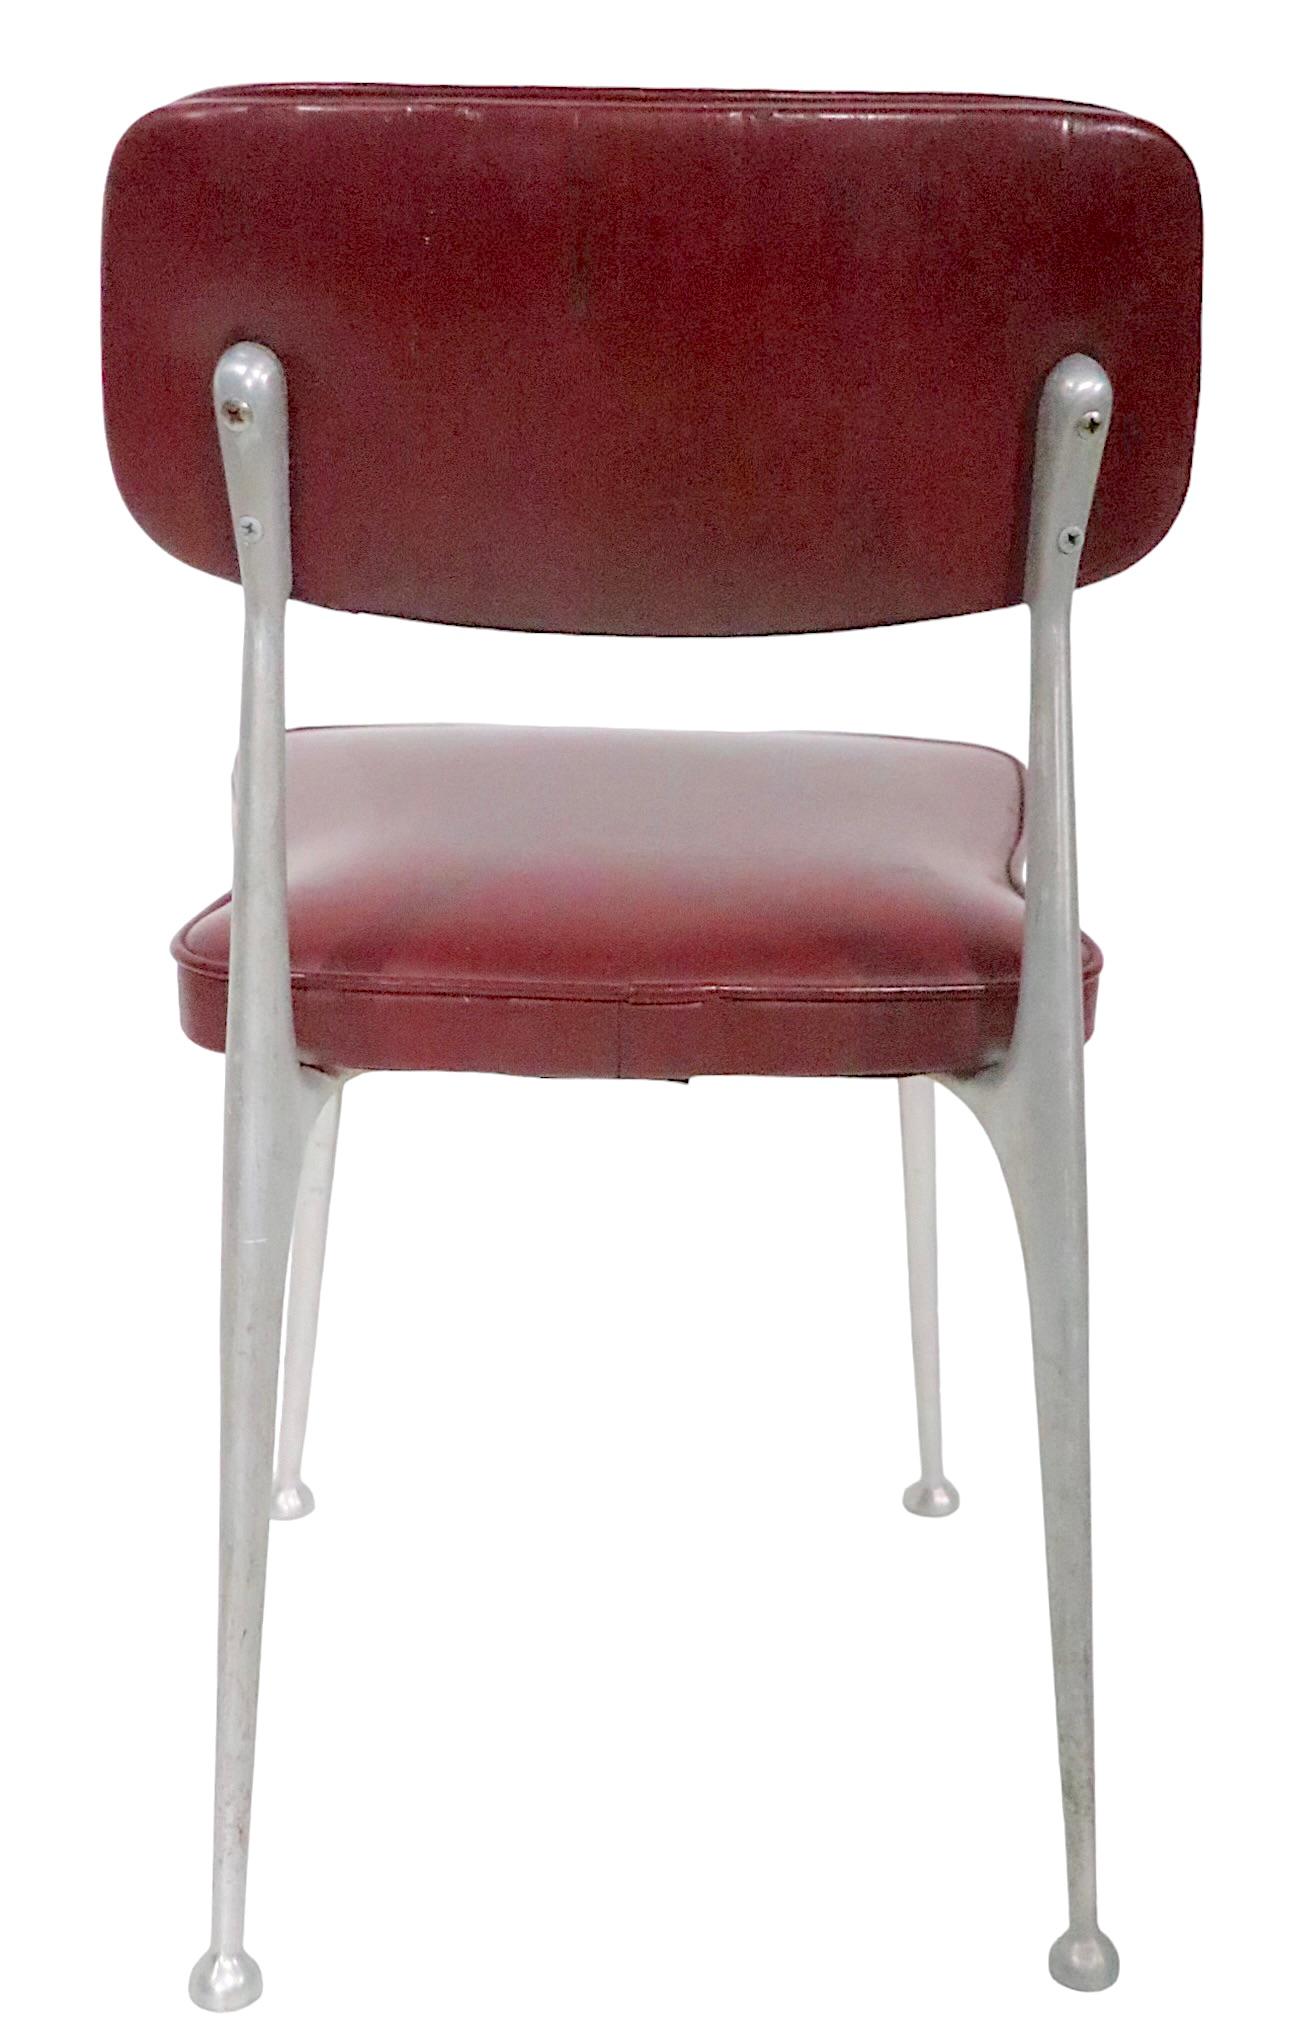 20th Century Shelby Williams Gazelle Cast Aluminum and Vinyl Chair, circa 1960s For Sale